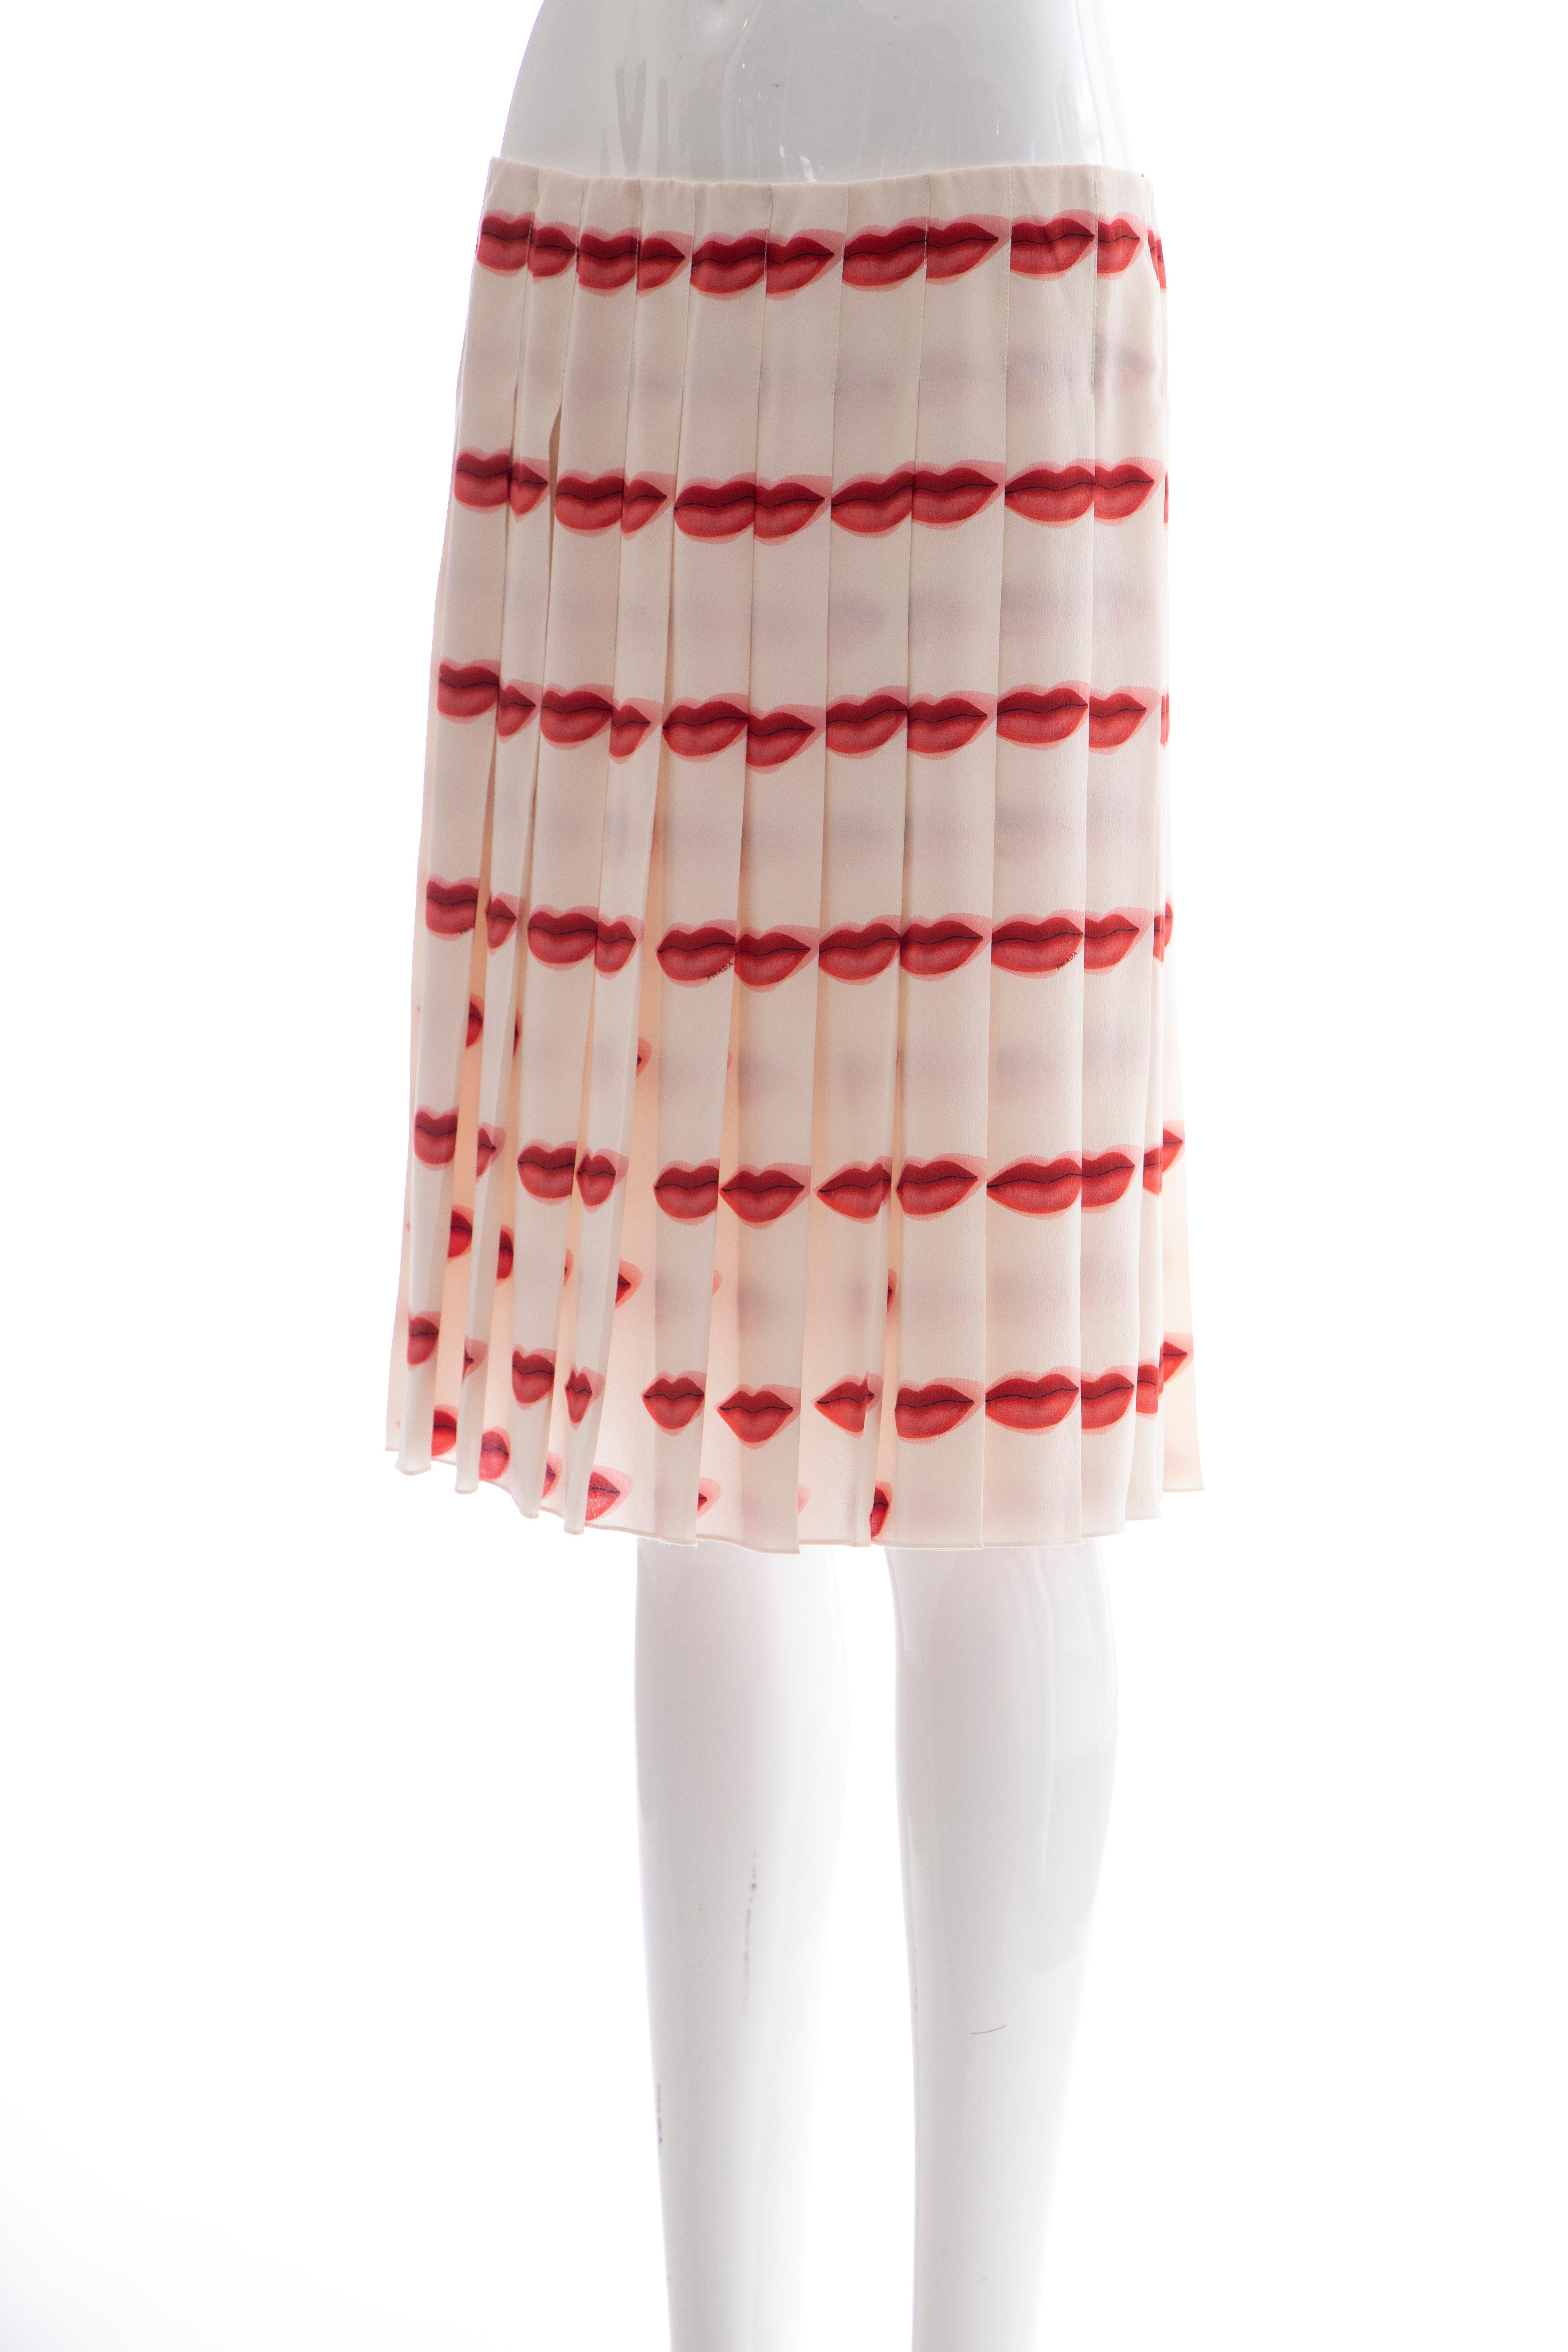 Prada Runway Silk Pleated Lip Print Skirt, Spring 2000 3